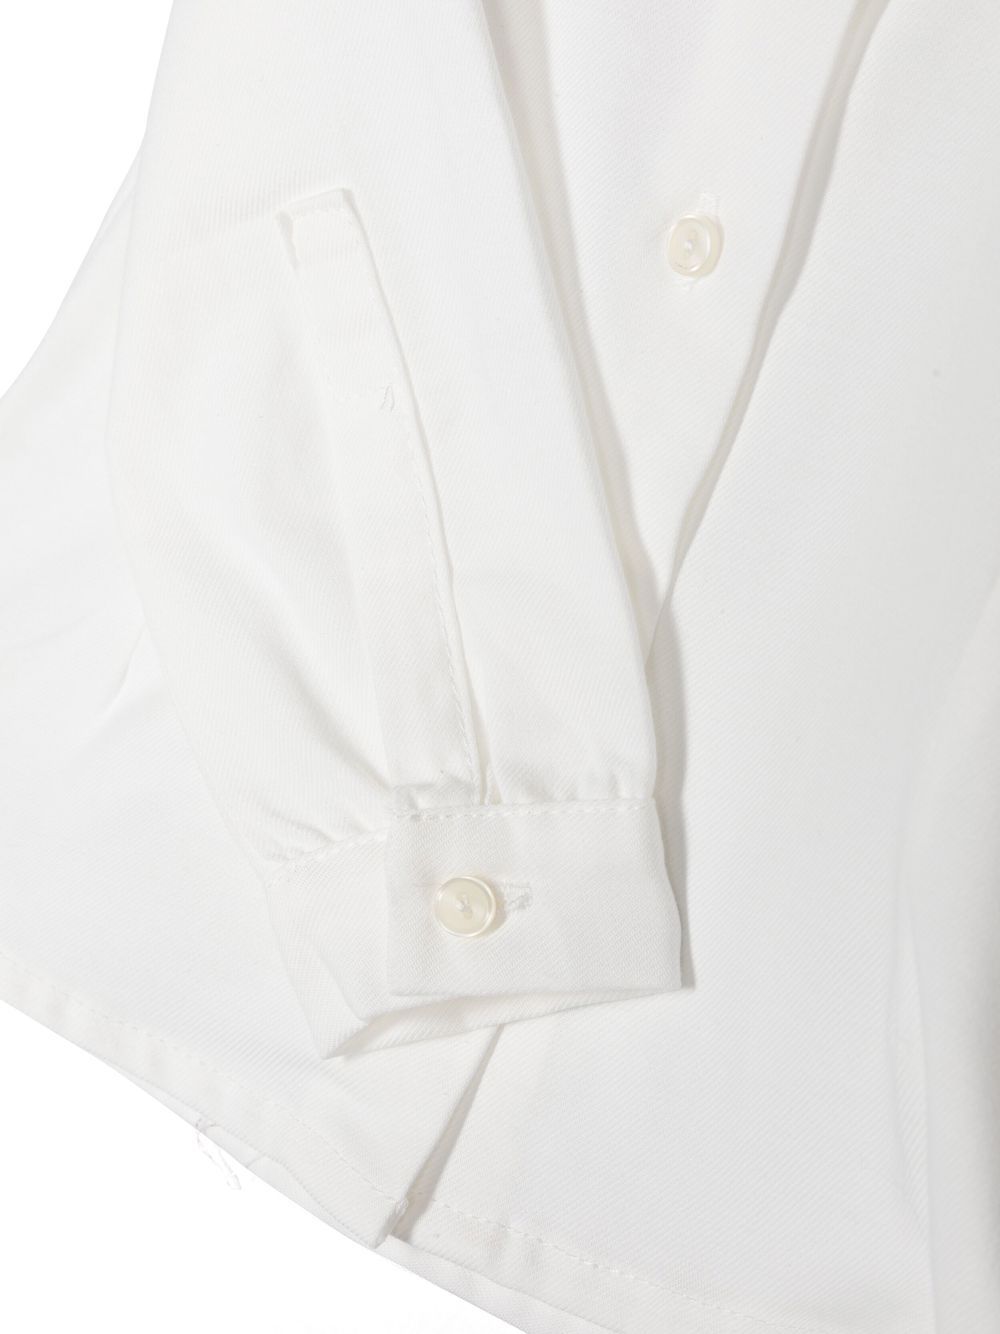 mariella ferrari frilled-high-neck shirt - white